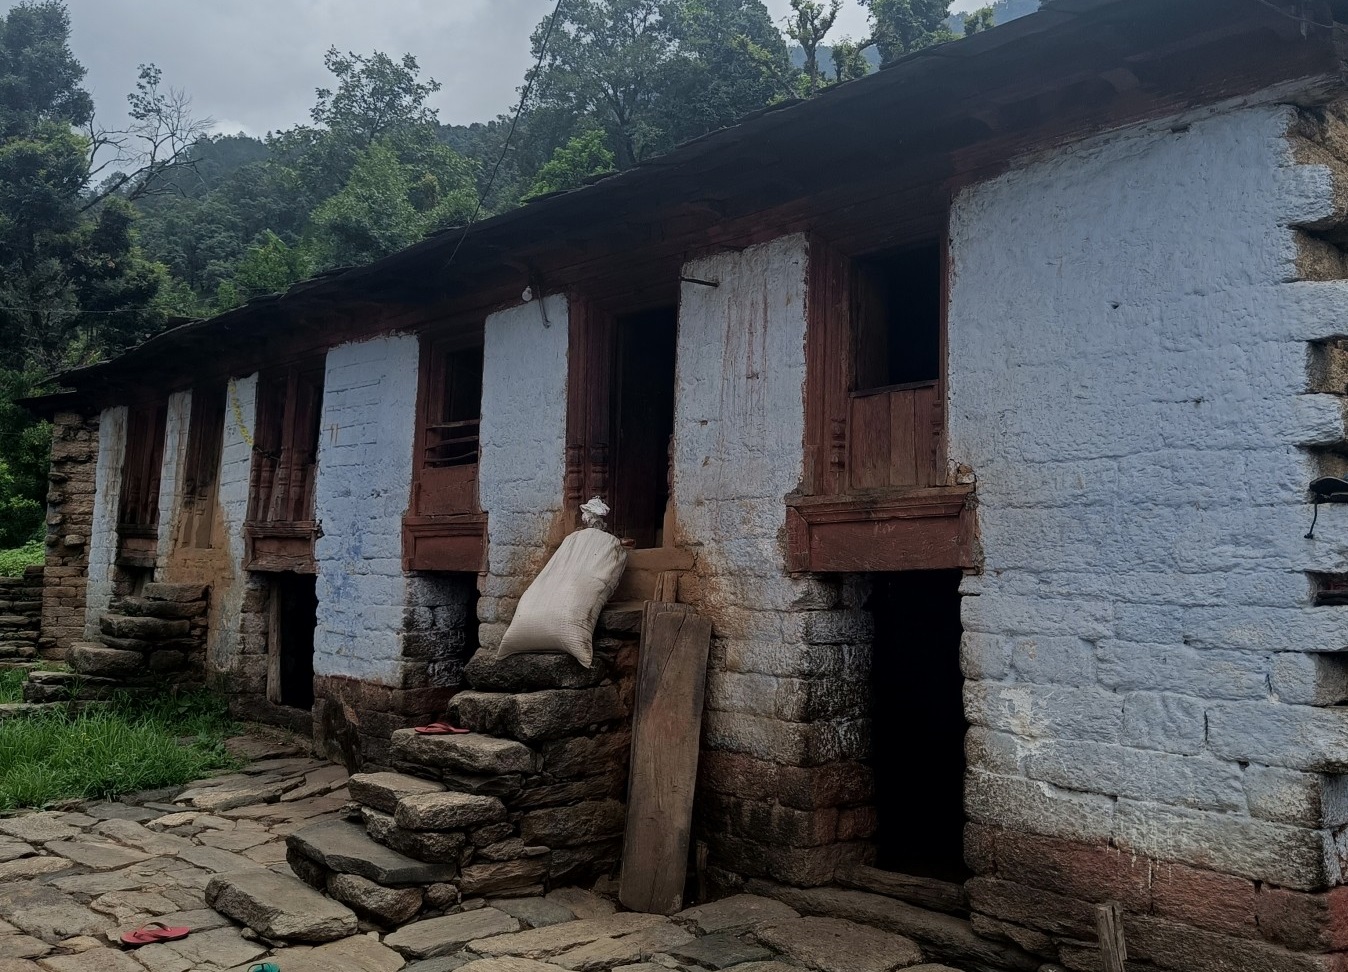 Atkwali village, Pithoragarh